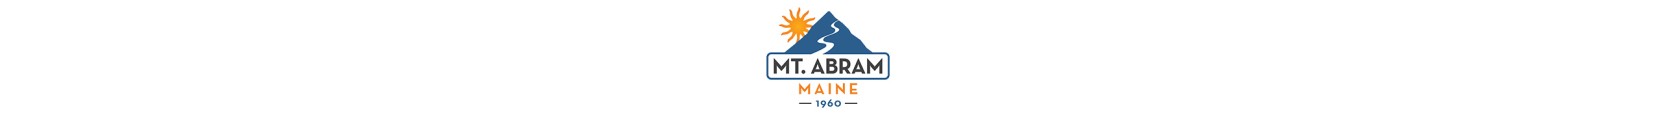 Mt. Abram logo